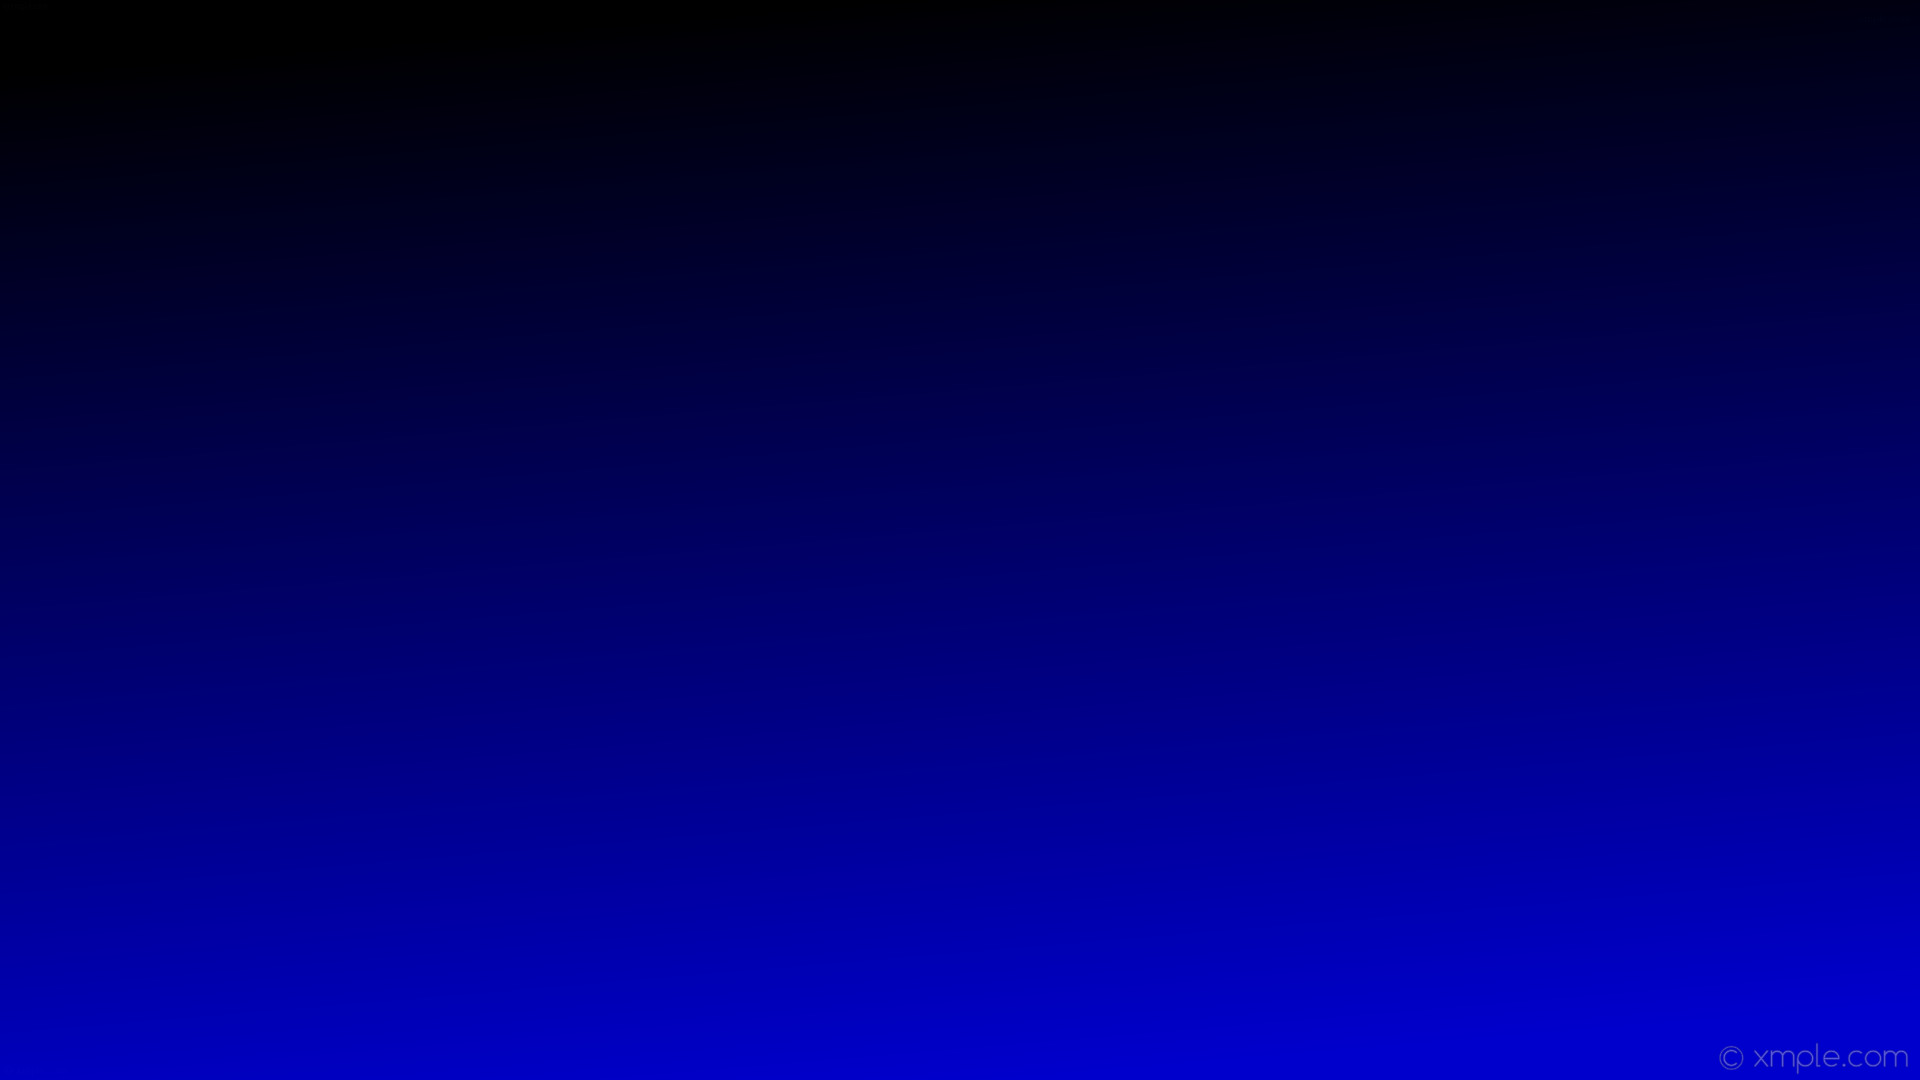 1920x1080 wallpaper black blue gradient linear medium blue #000000 #0000cd 105Â°